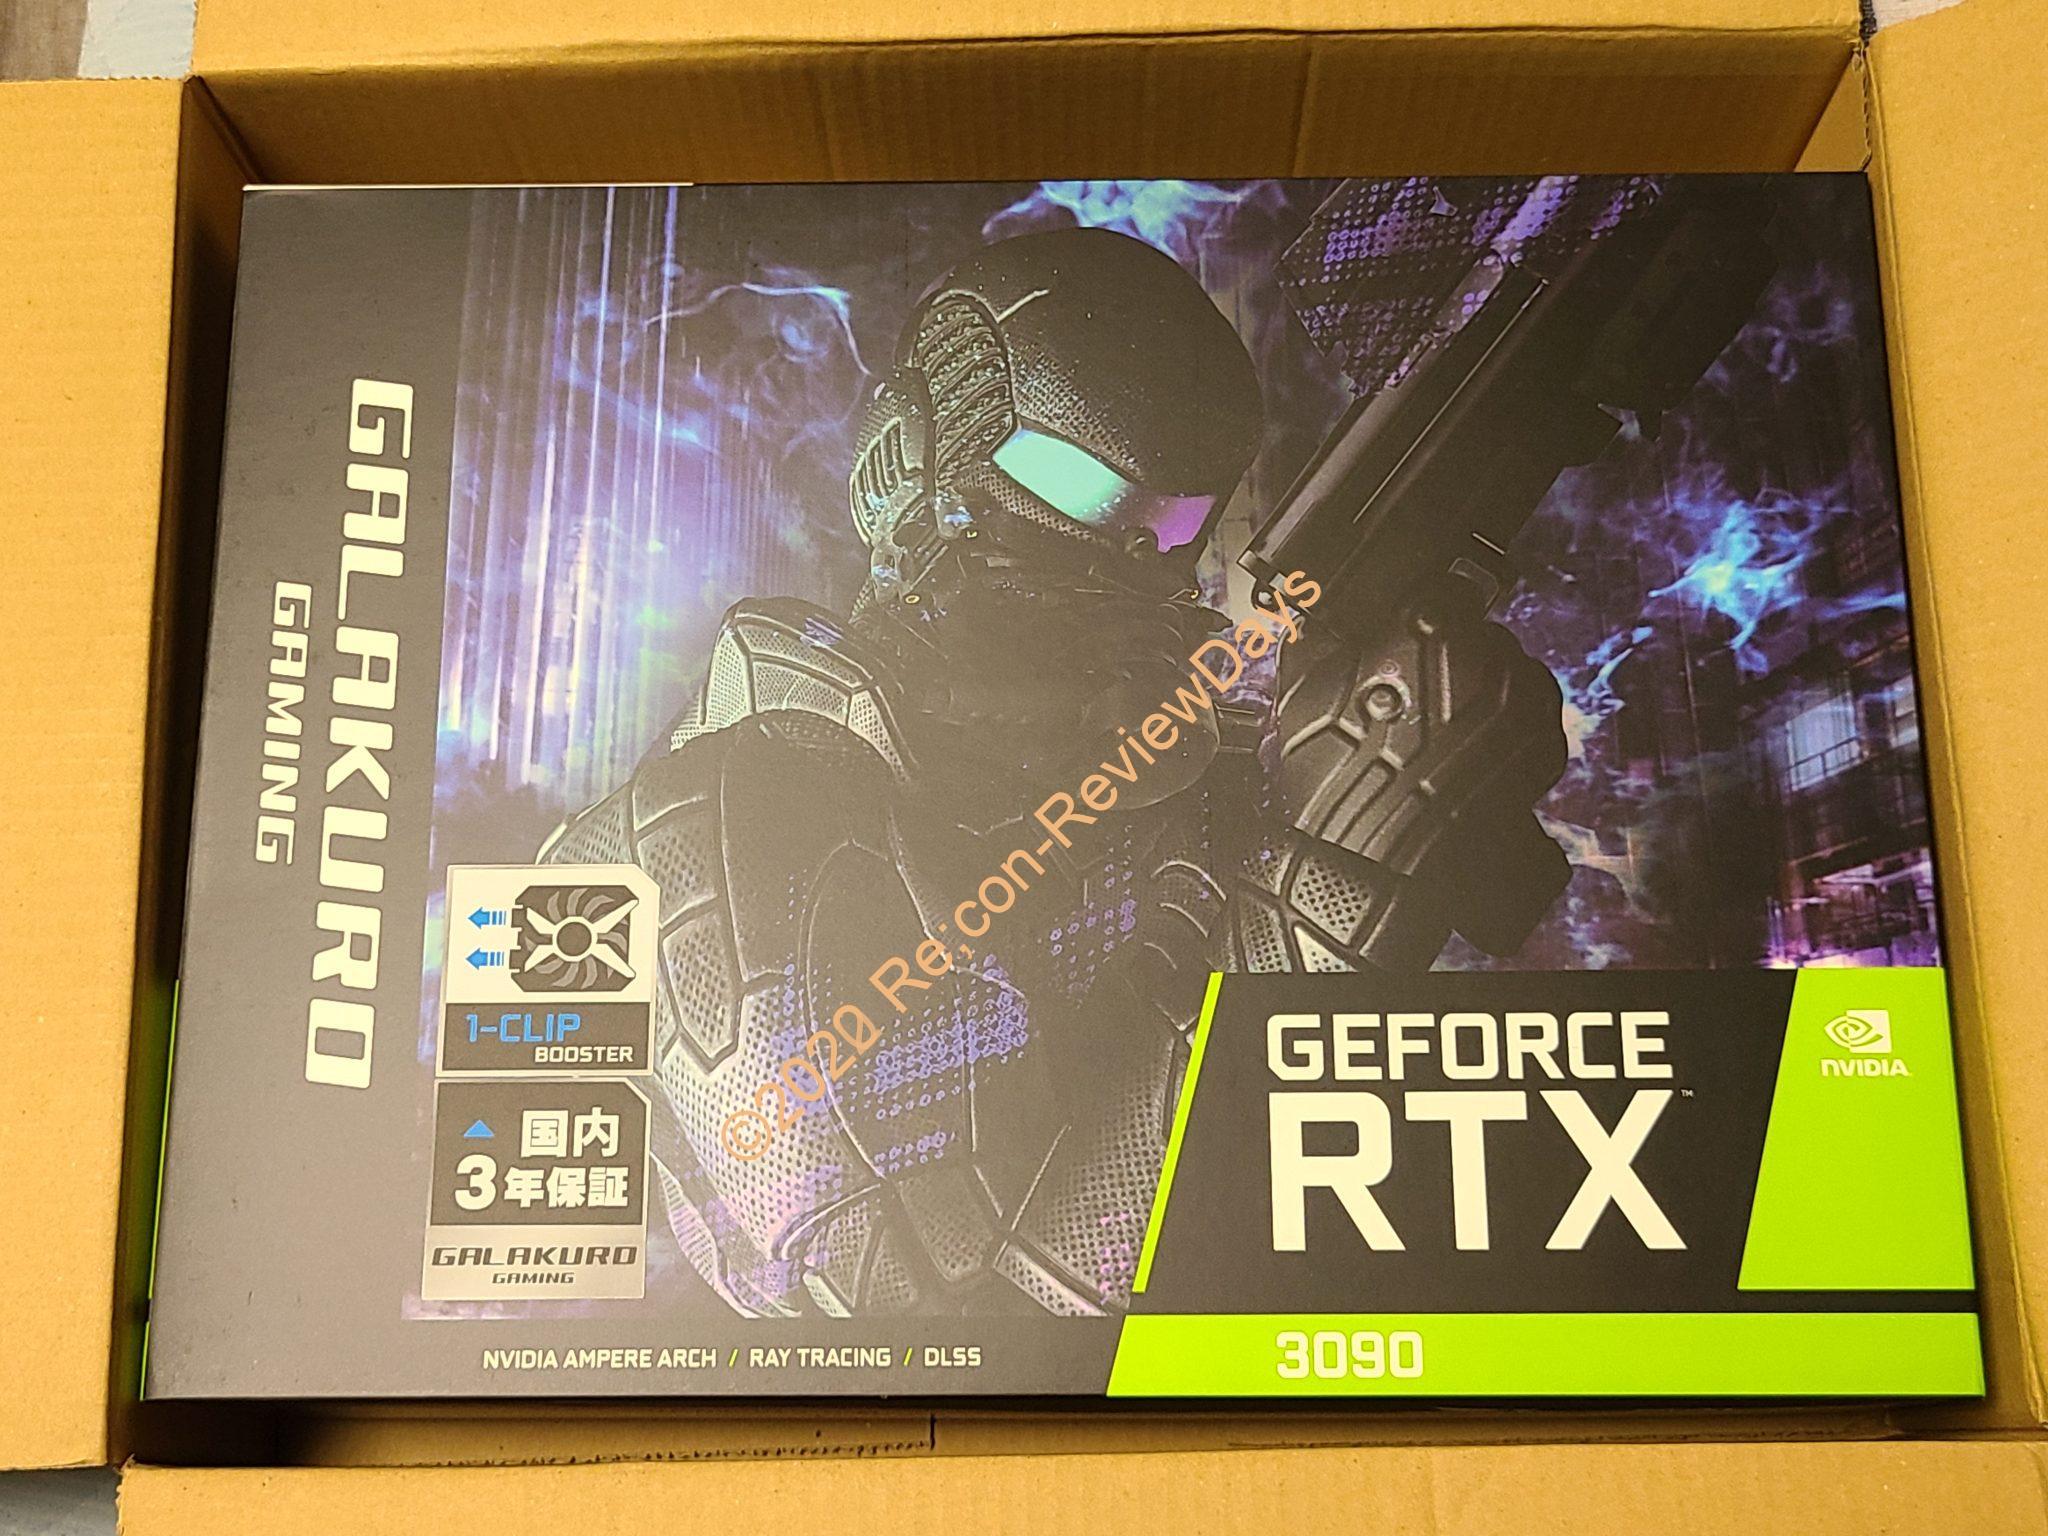 GALAKURO GAMING製のGeForce RTX 3090搭載カード「GG-RTX3090-E24GB/TP」が到着しました #NVIDIA #GeForce #RTX3090